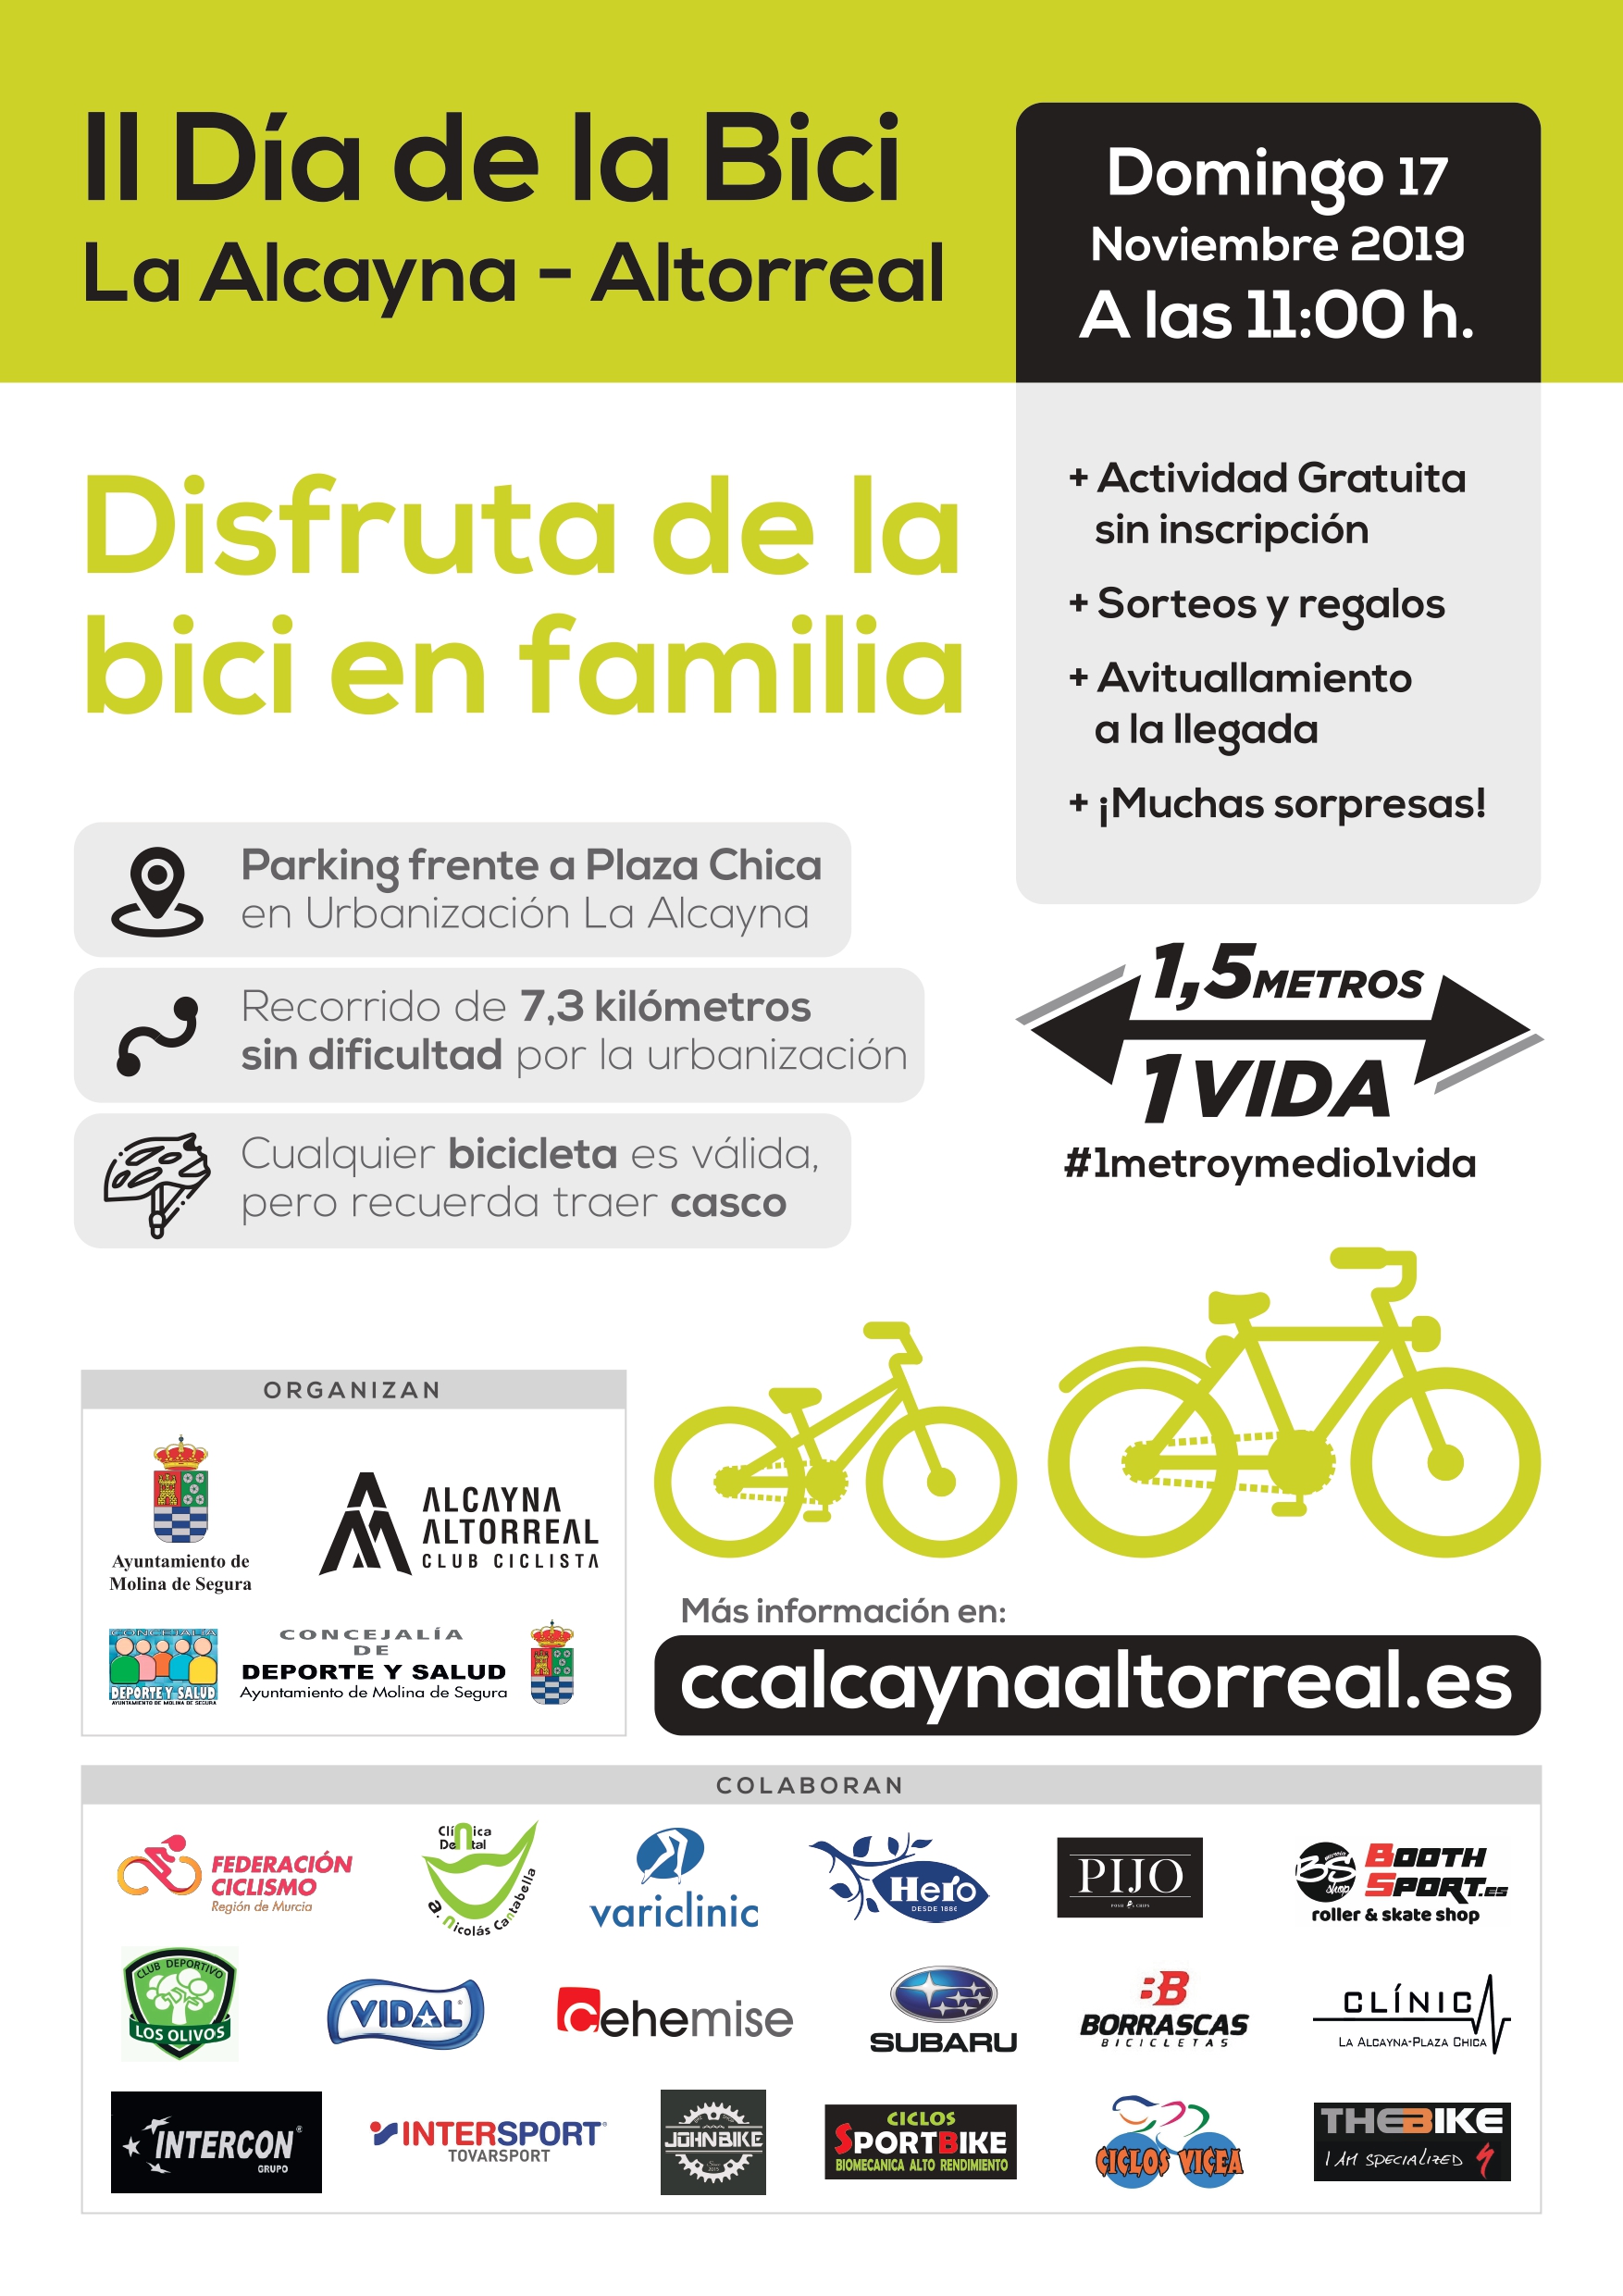 Deporte-Molina-II Da de la Bici La Alcayna-Altorreal 2019-Da 17-CARTEL_page-0001.jpg